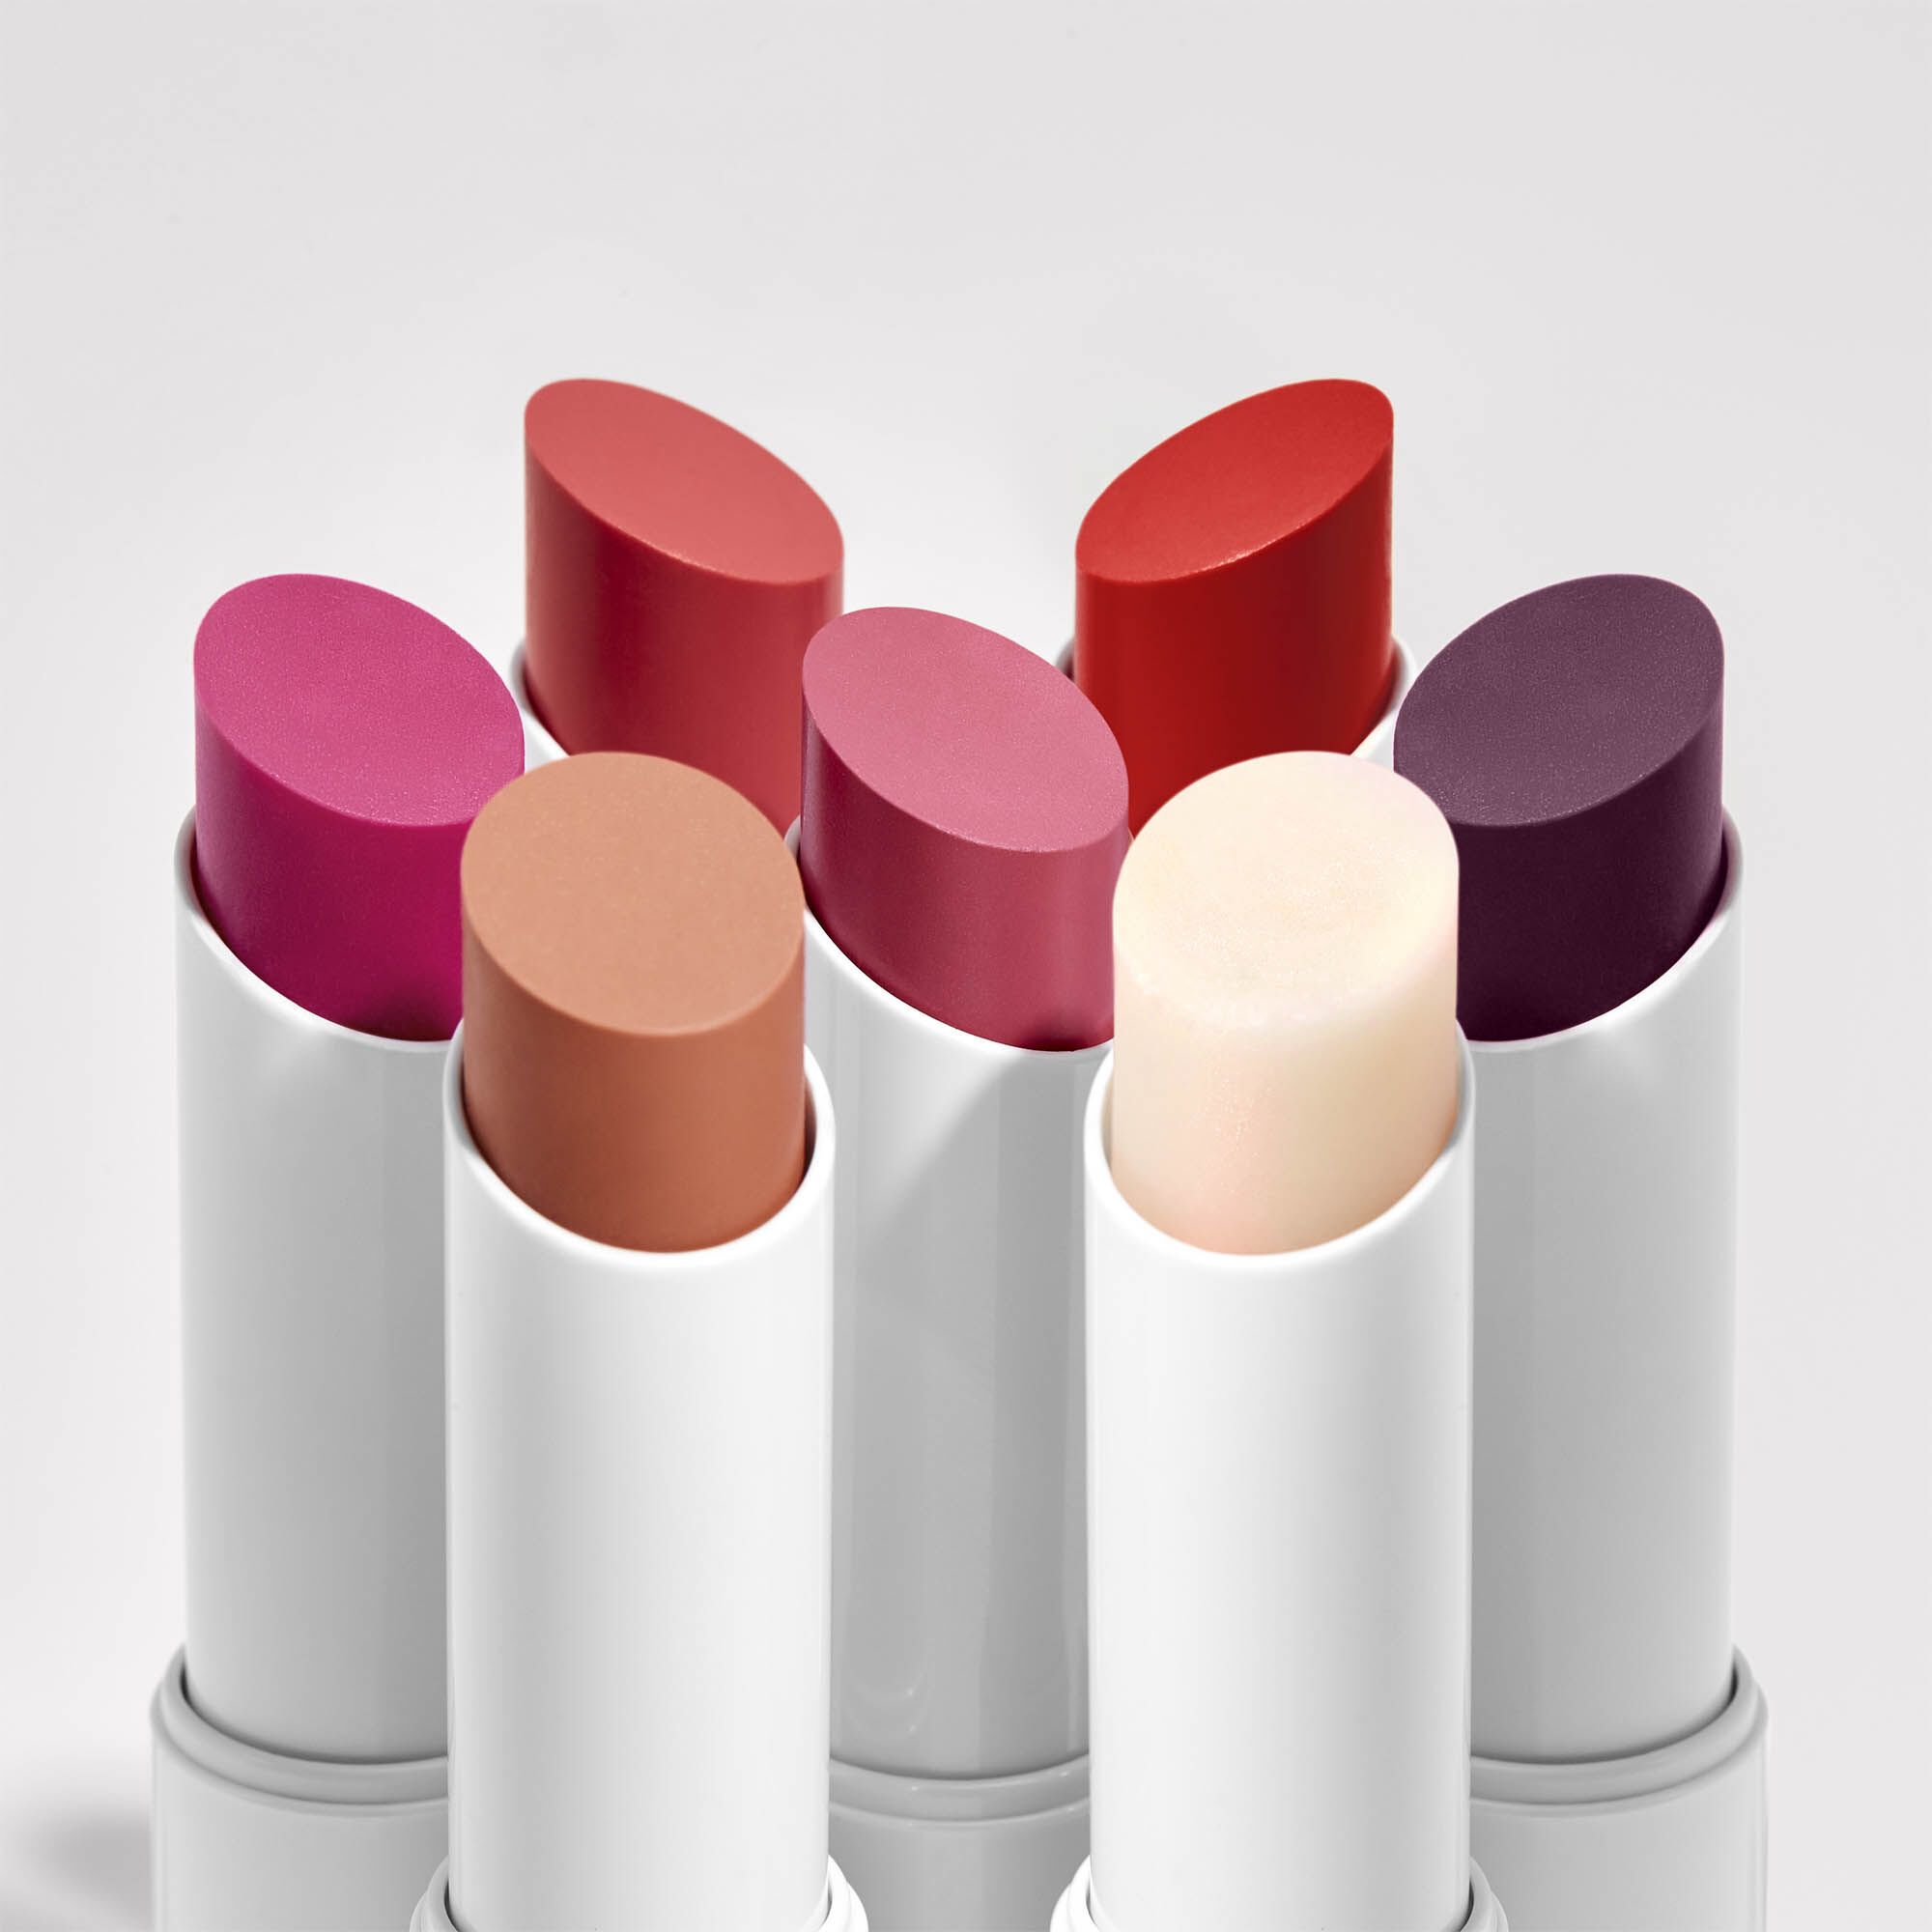 Tinted Lip Balm | The Honest Company